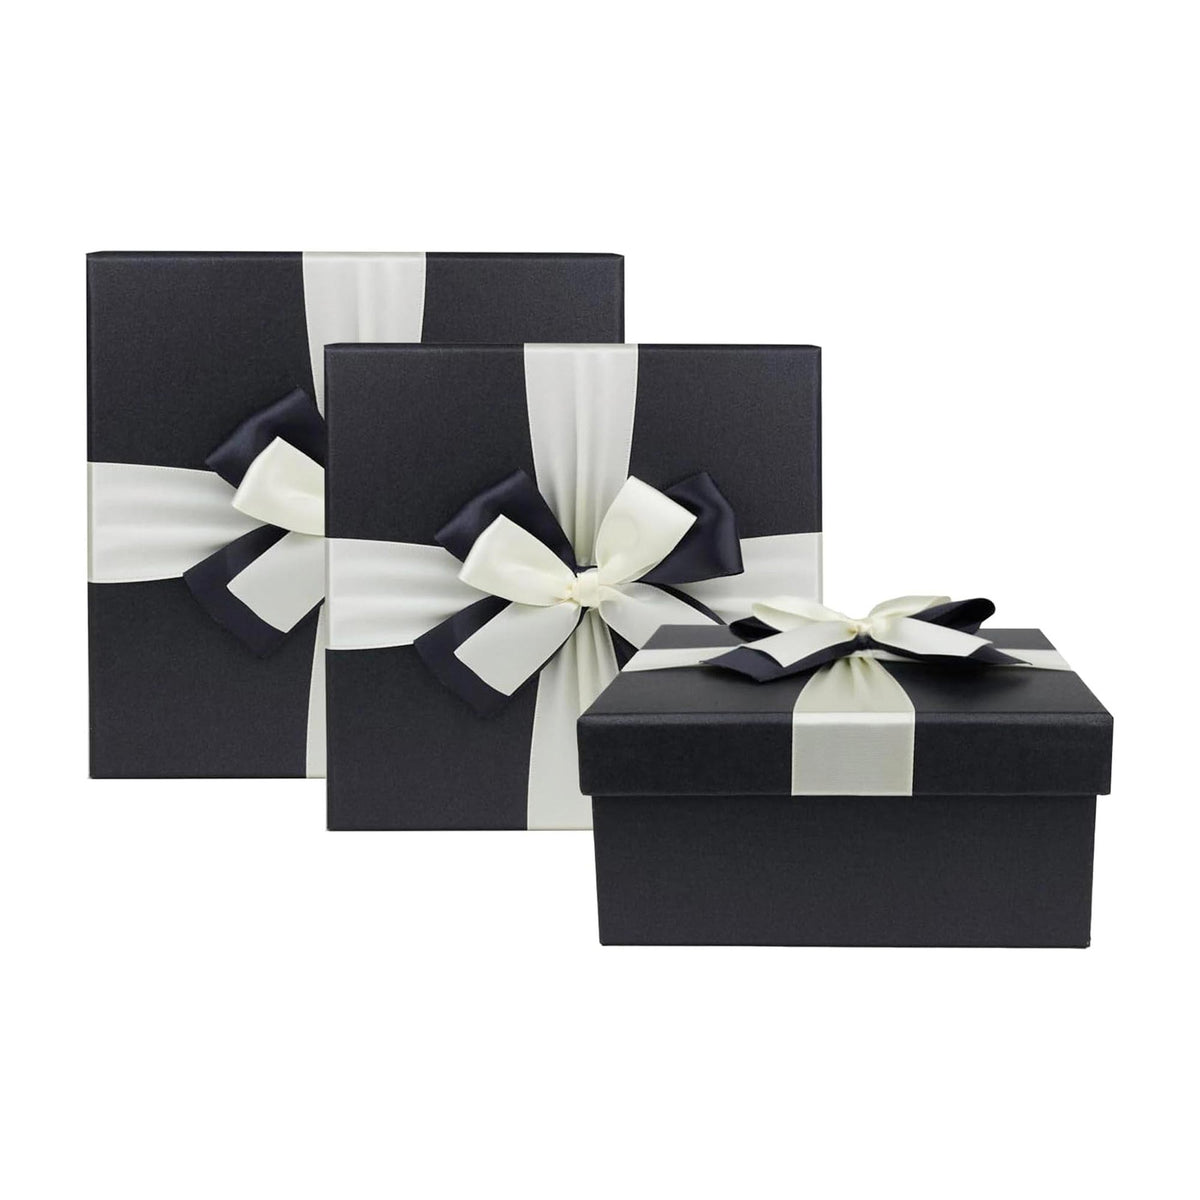 Luxury Black Gift Boxes - Set of 3 (Sizes Available)